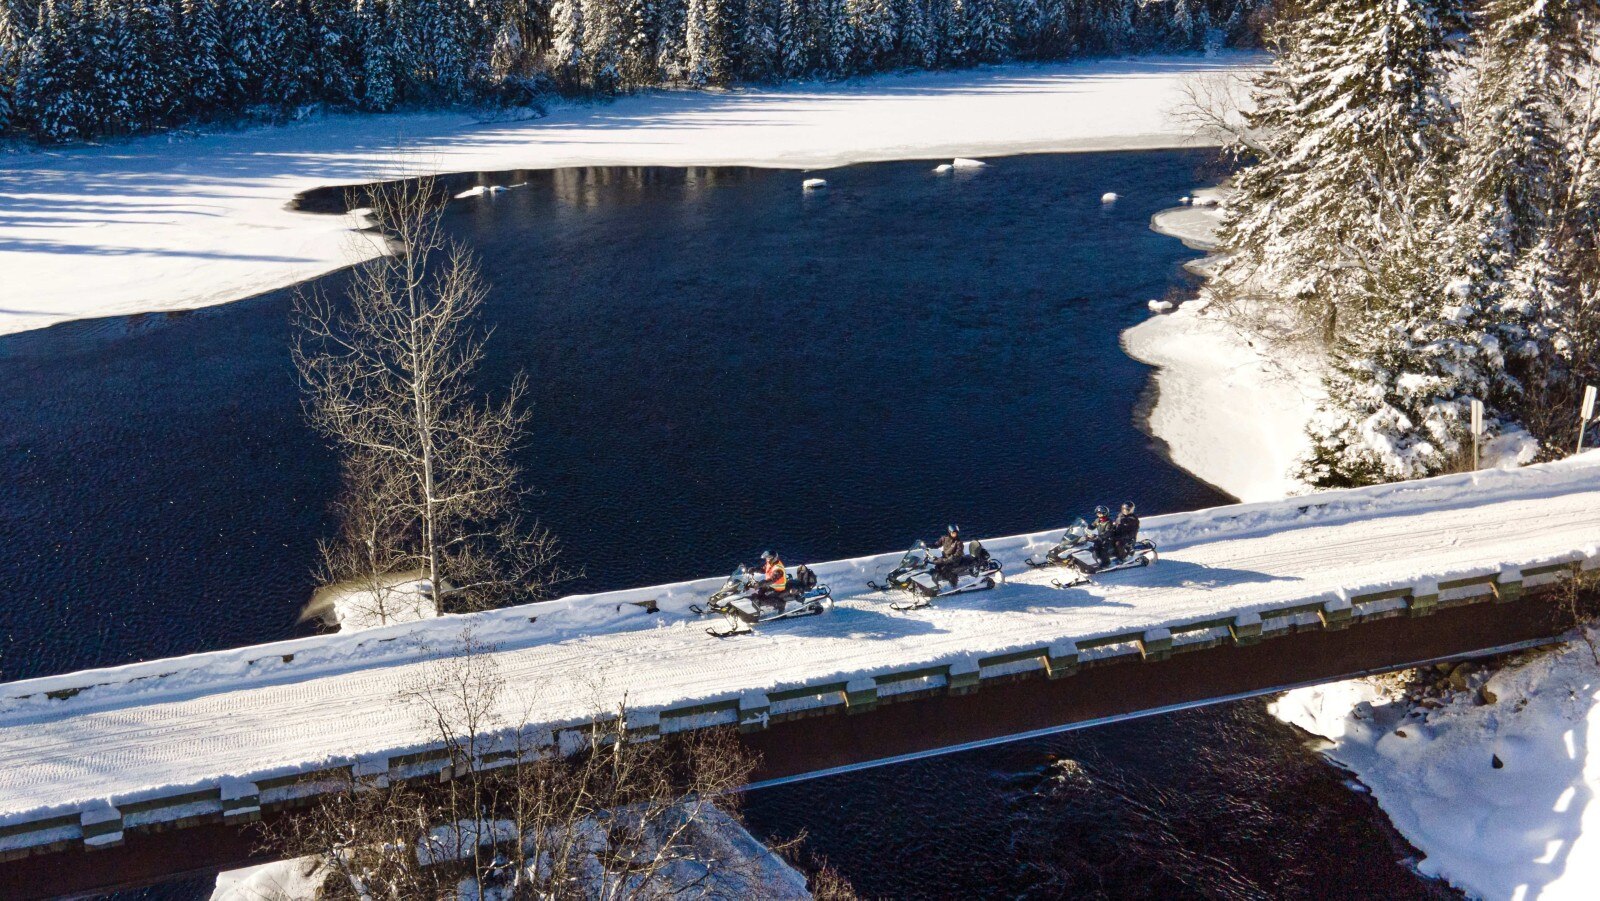 Snowmobiles crosing a bridge in winter